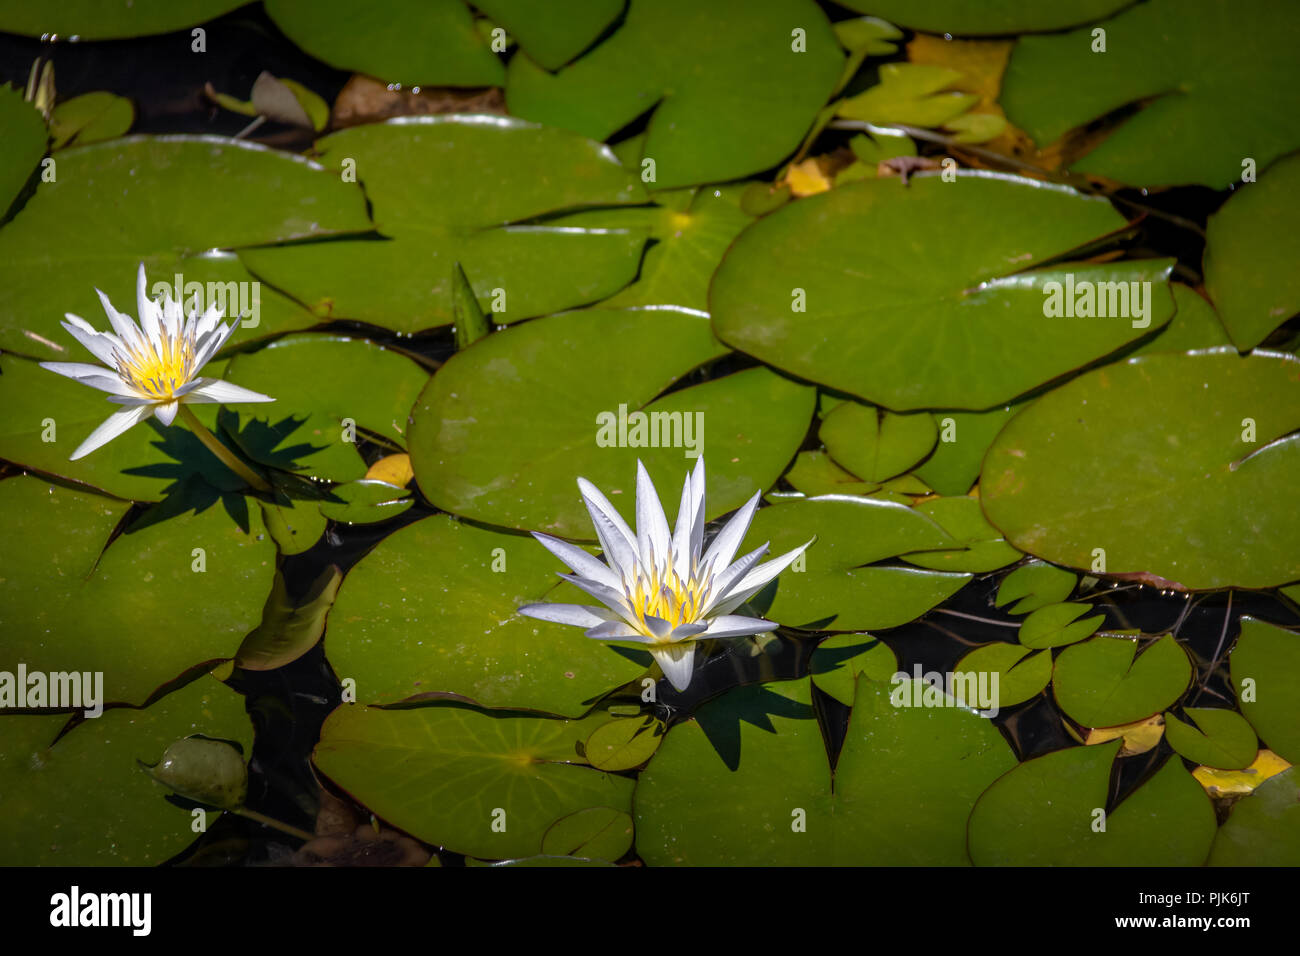 Nymphaea lotus flower at Itamaraty Palace pond - Brasilia, Distrito Federal, Brazil Stock Photo